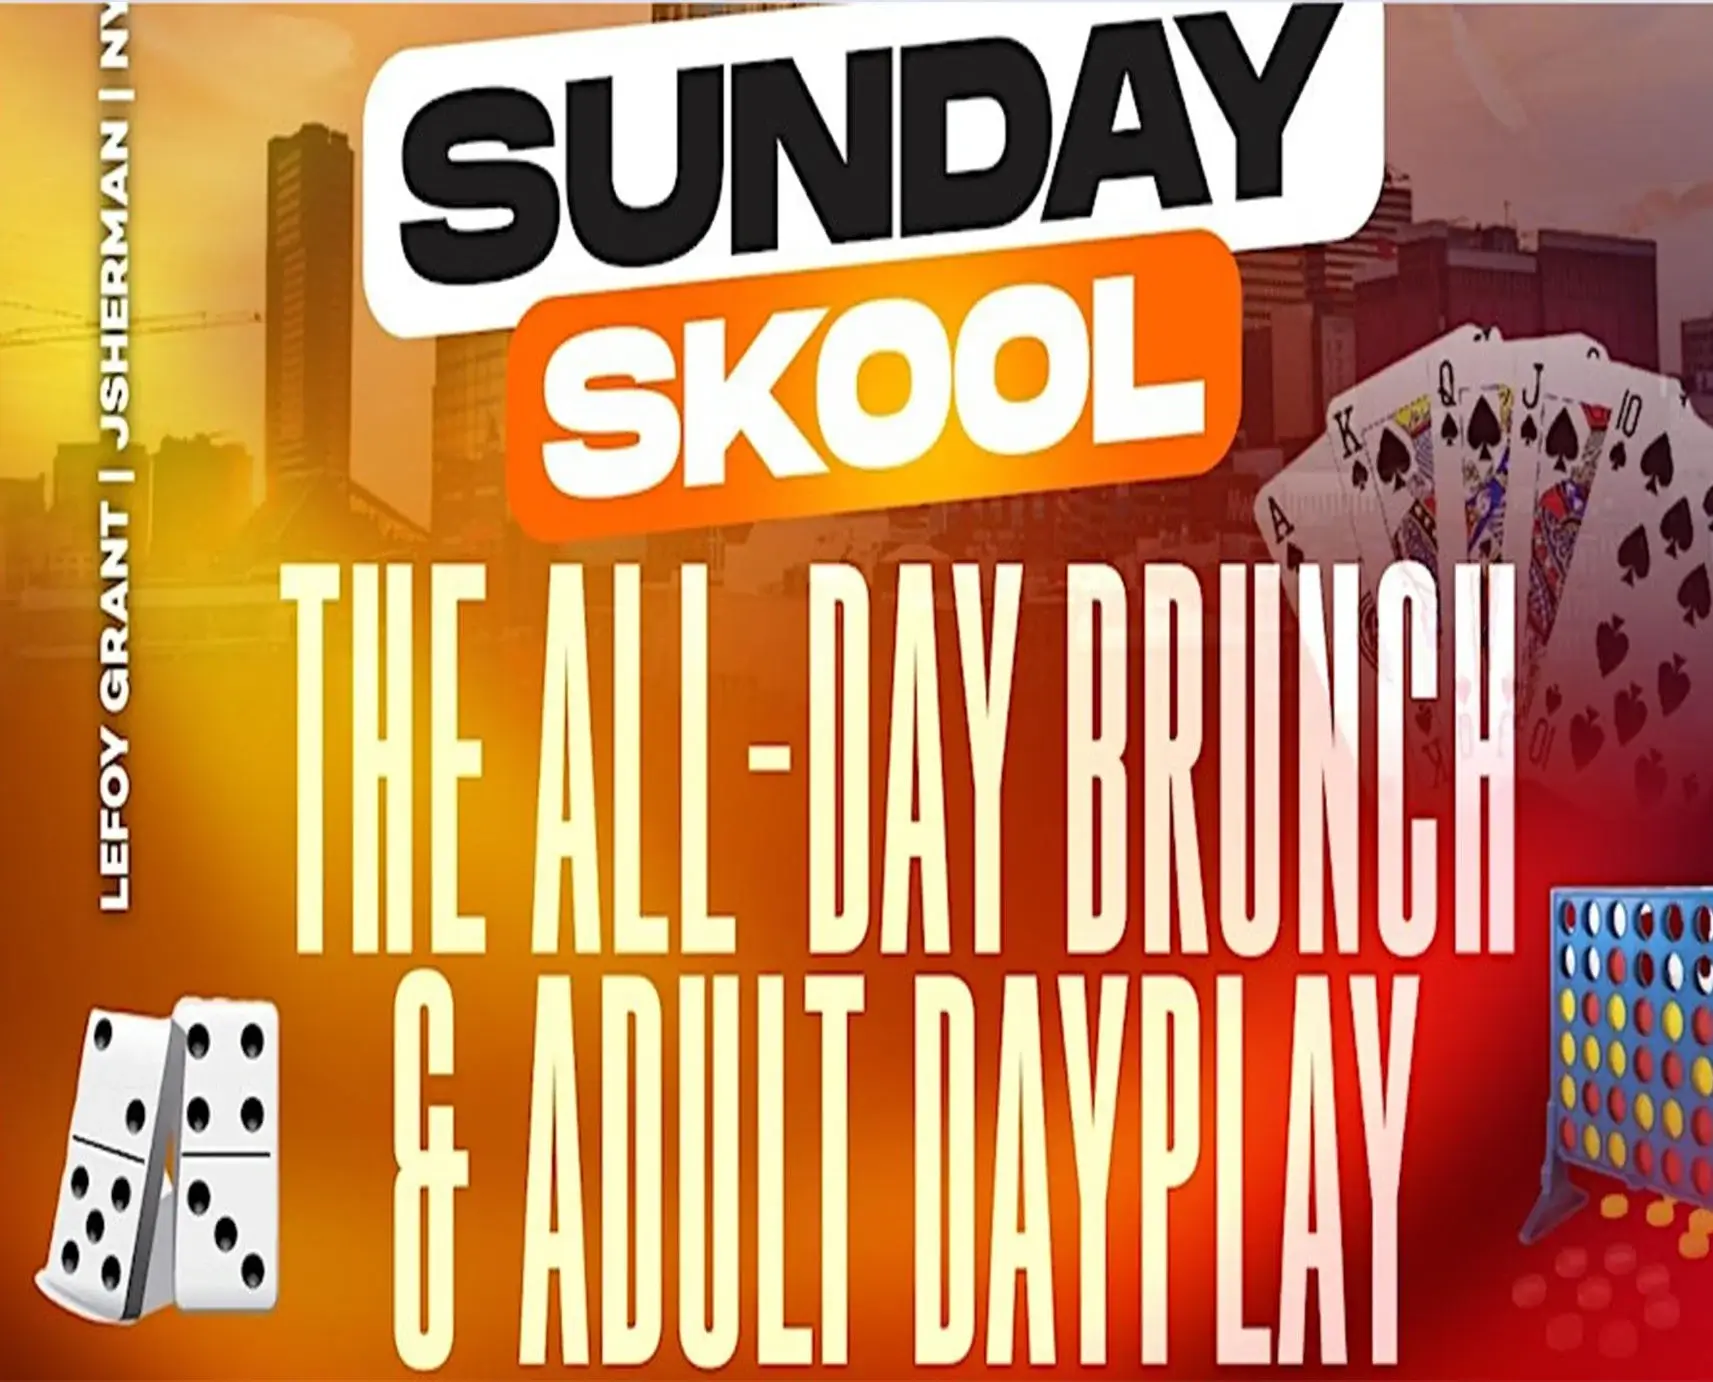 "SUNDAY SKOOL" The Adult Dayplay feat. Amazing Food, DJs, Games & Karaoke!